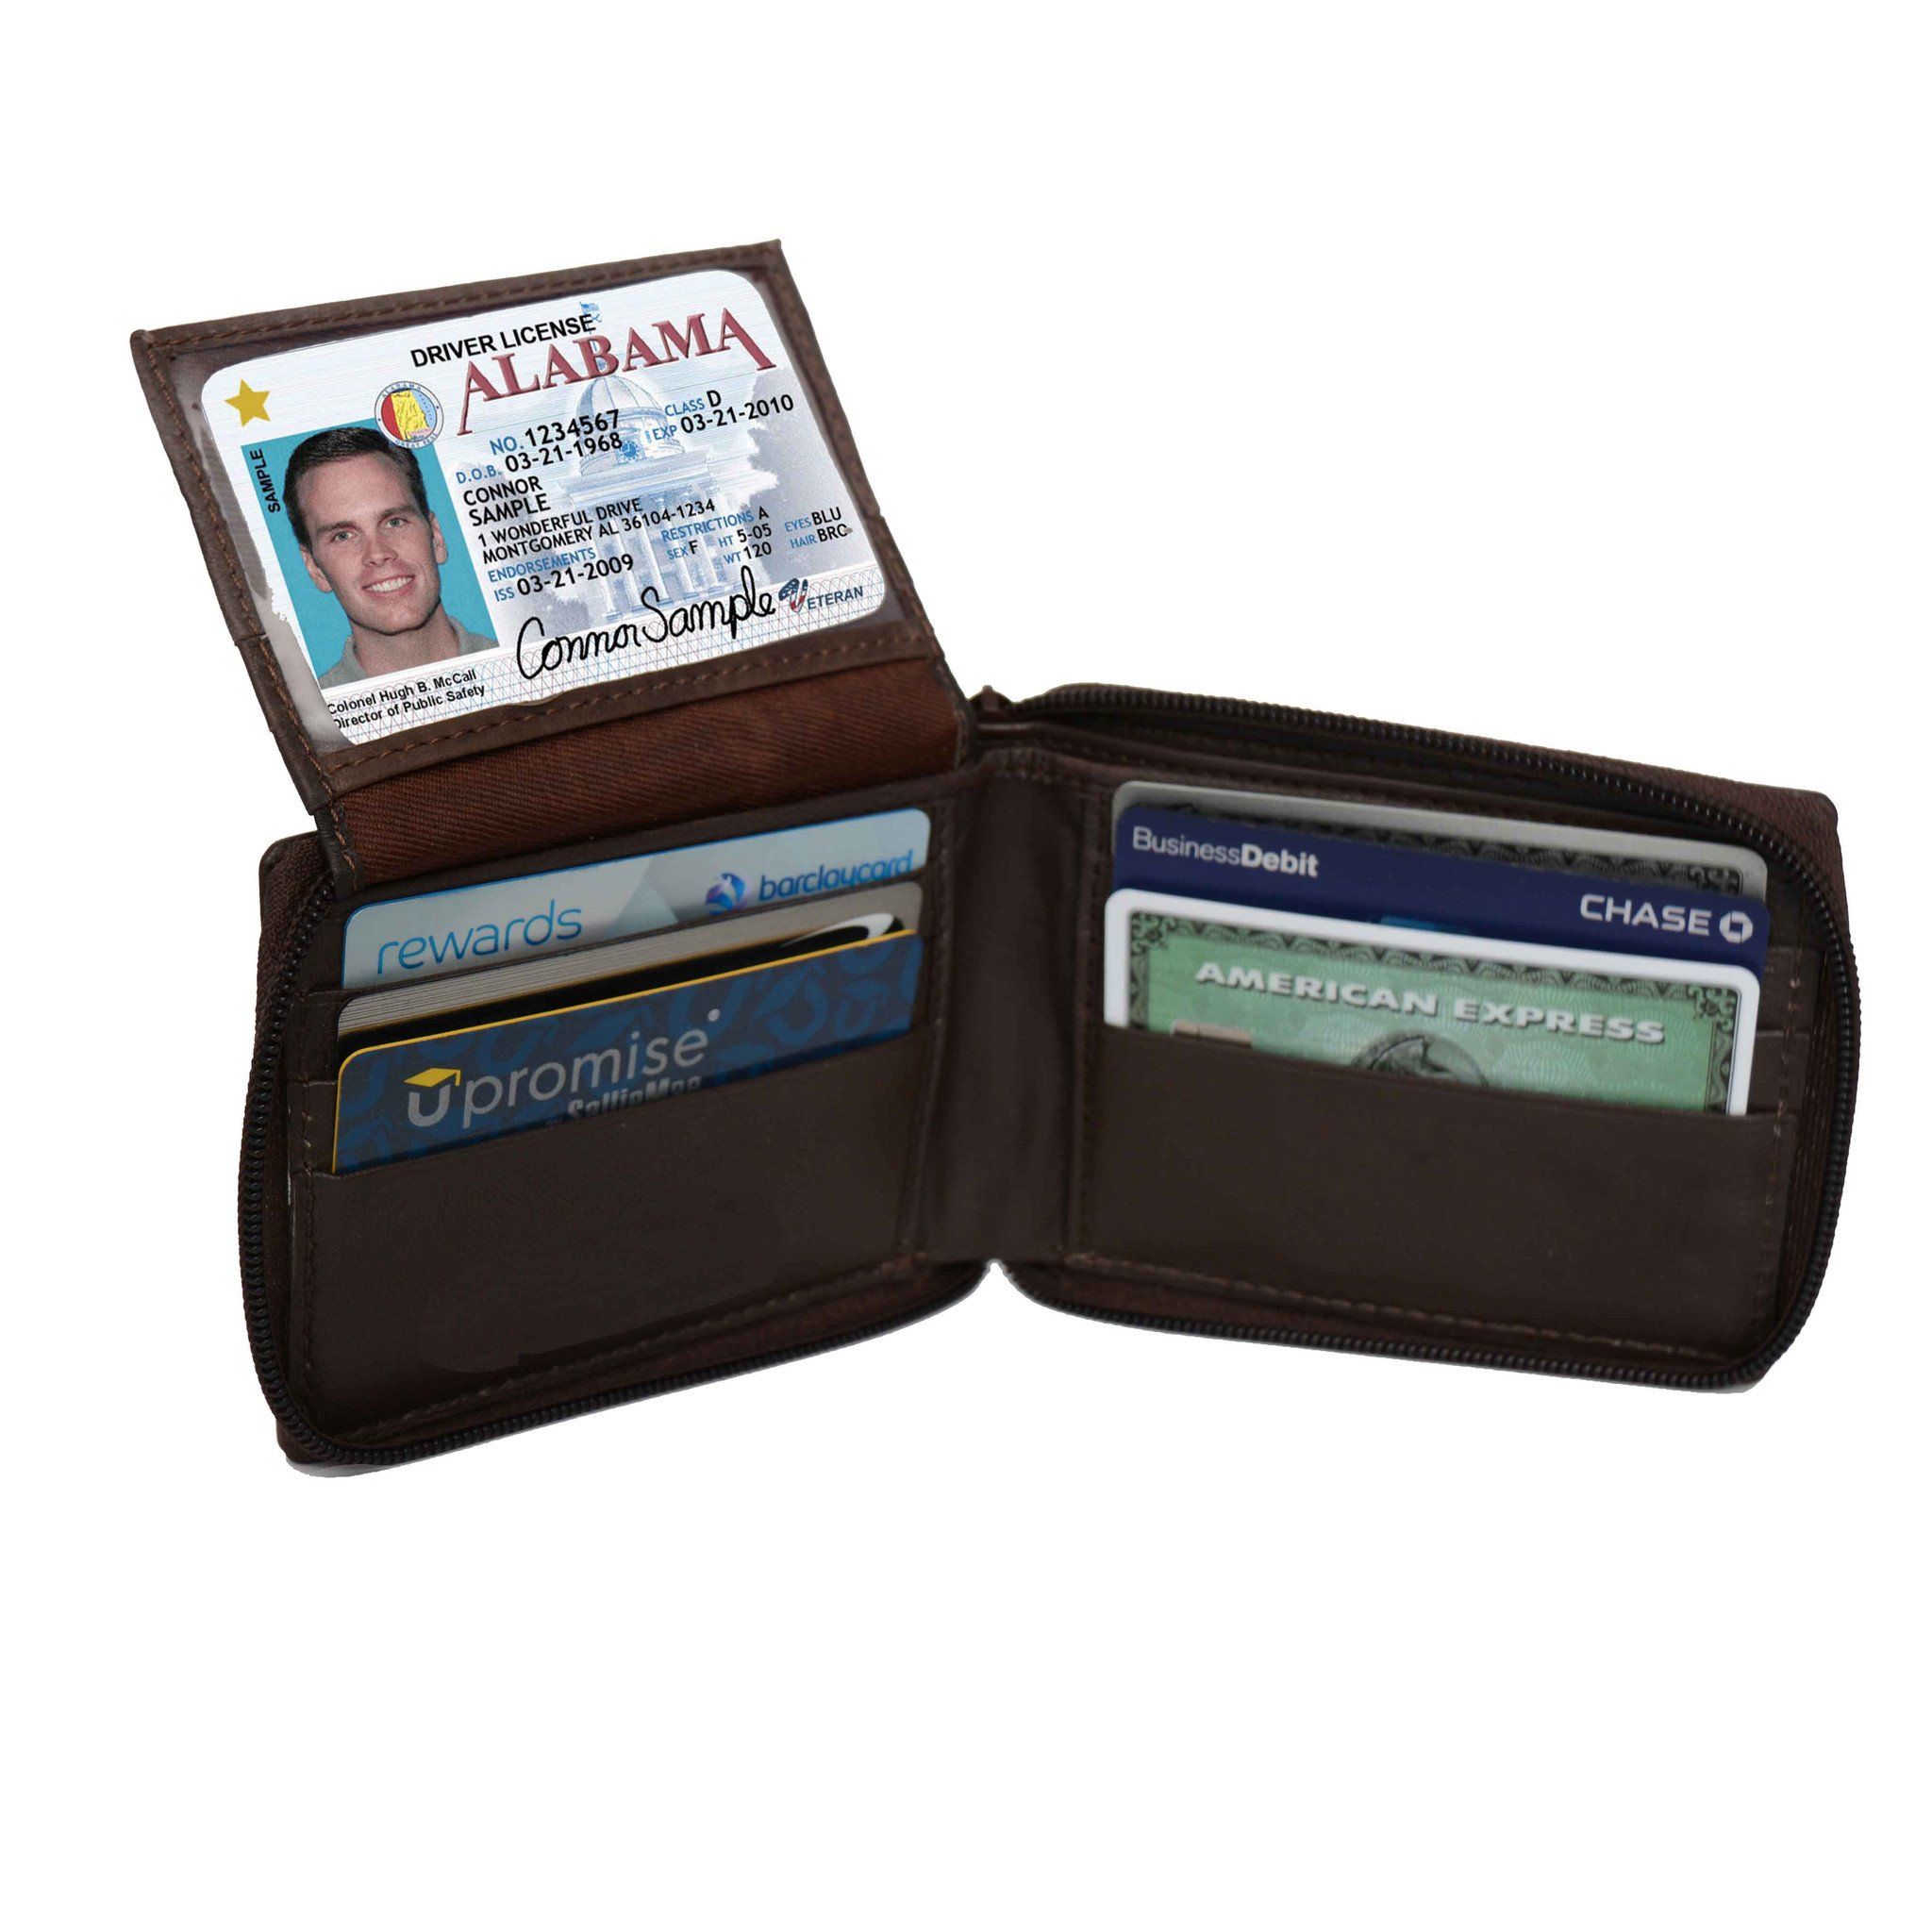 Genuine Flip ID Zipped Soft Leather Bifold Wallet - Black